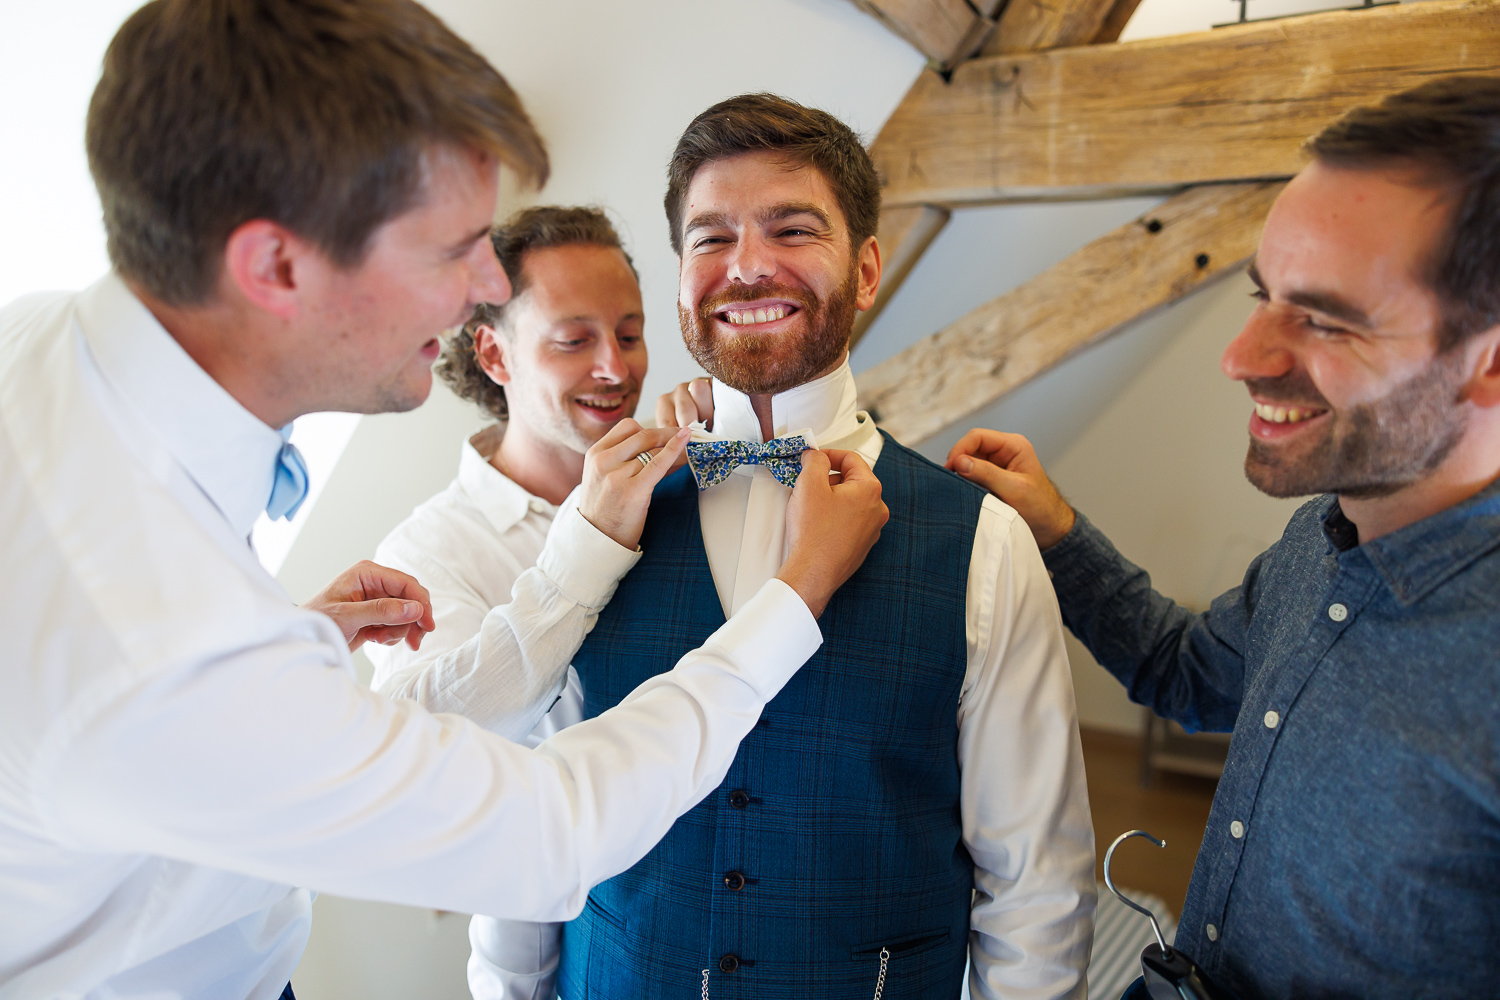 Groom preparation with bow-tie - wedding Brussels